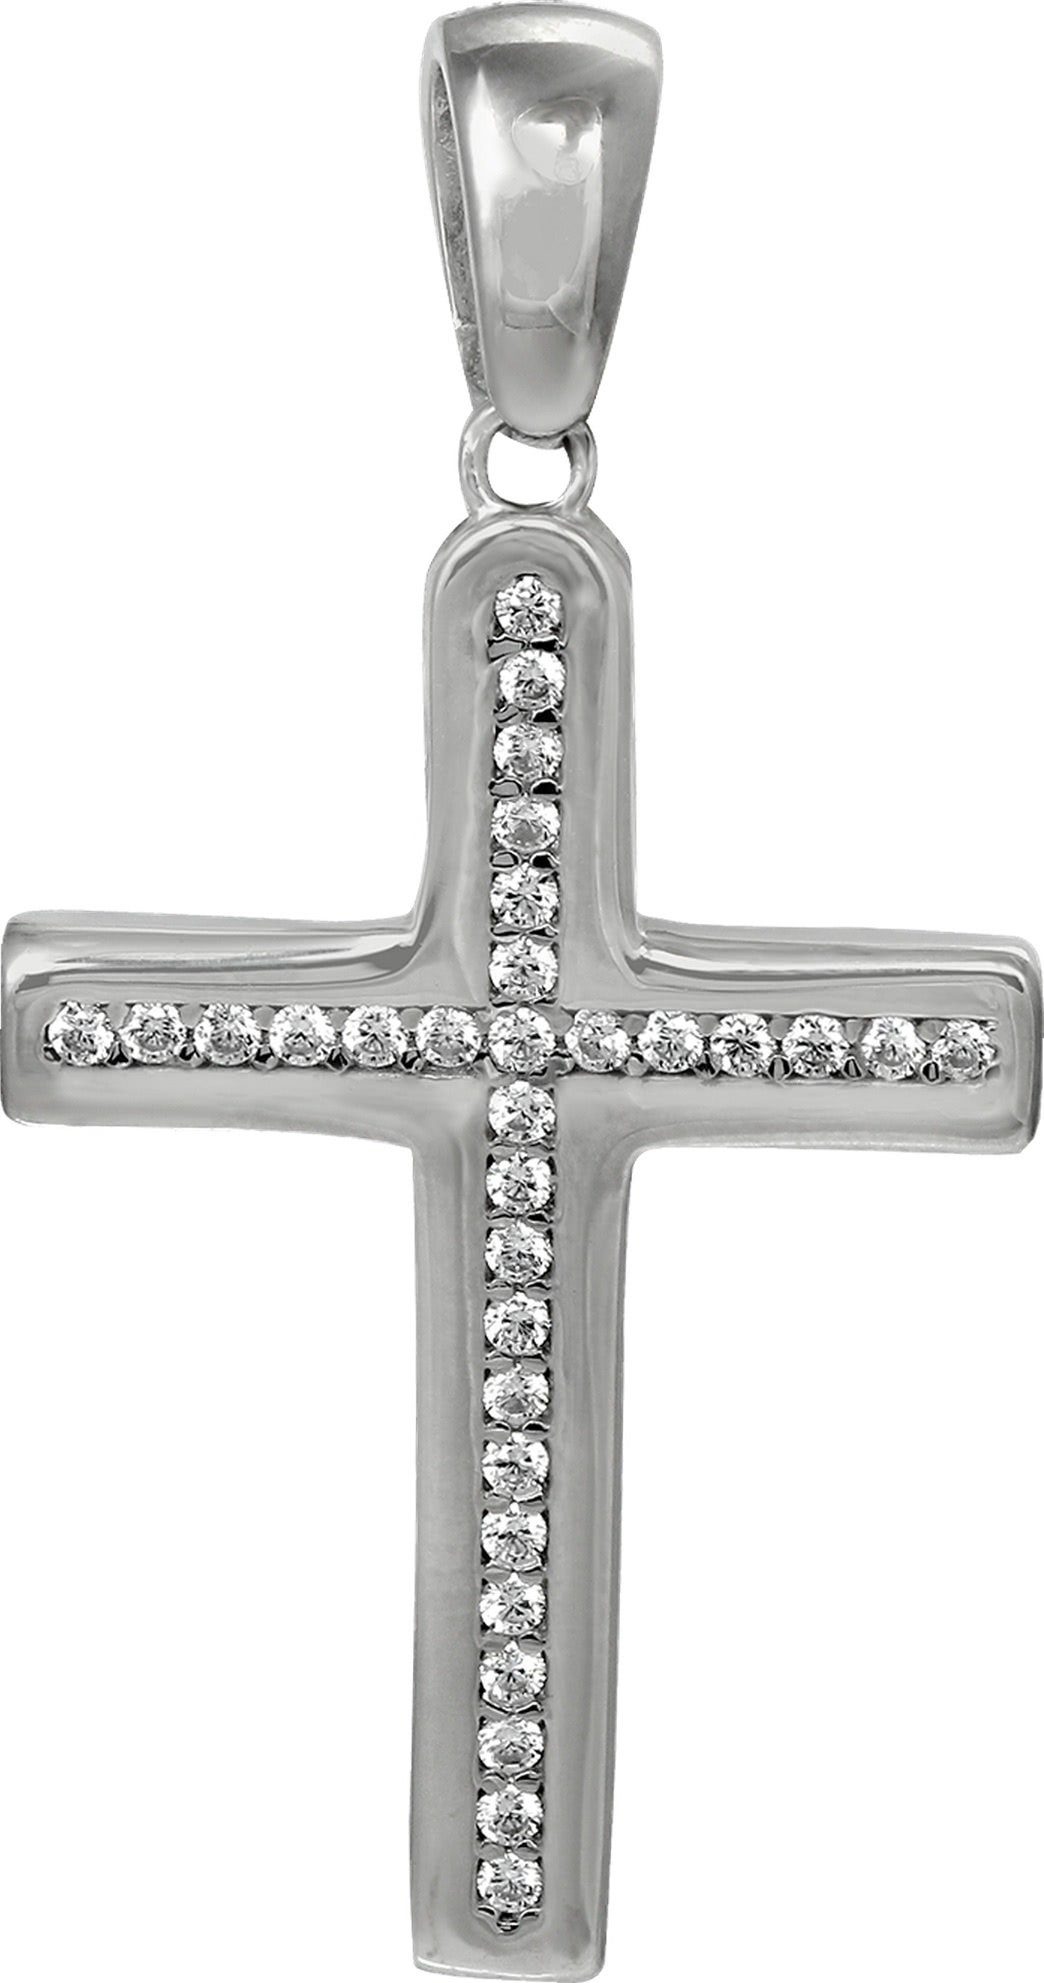 SilberDream -Kreuz-, Sterling SilberDream weiß silber, 925 Kettenanhänger Silber, Kreuzanhänger Ketten Anhänger